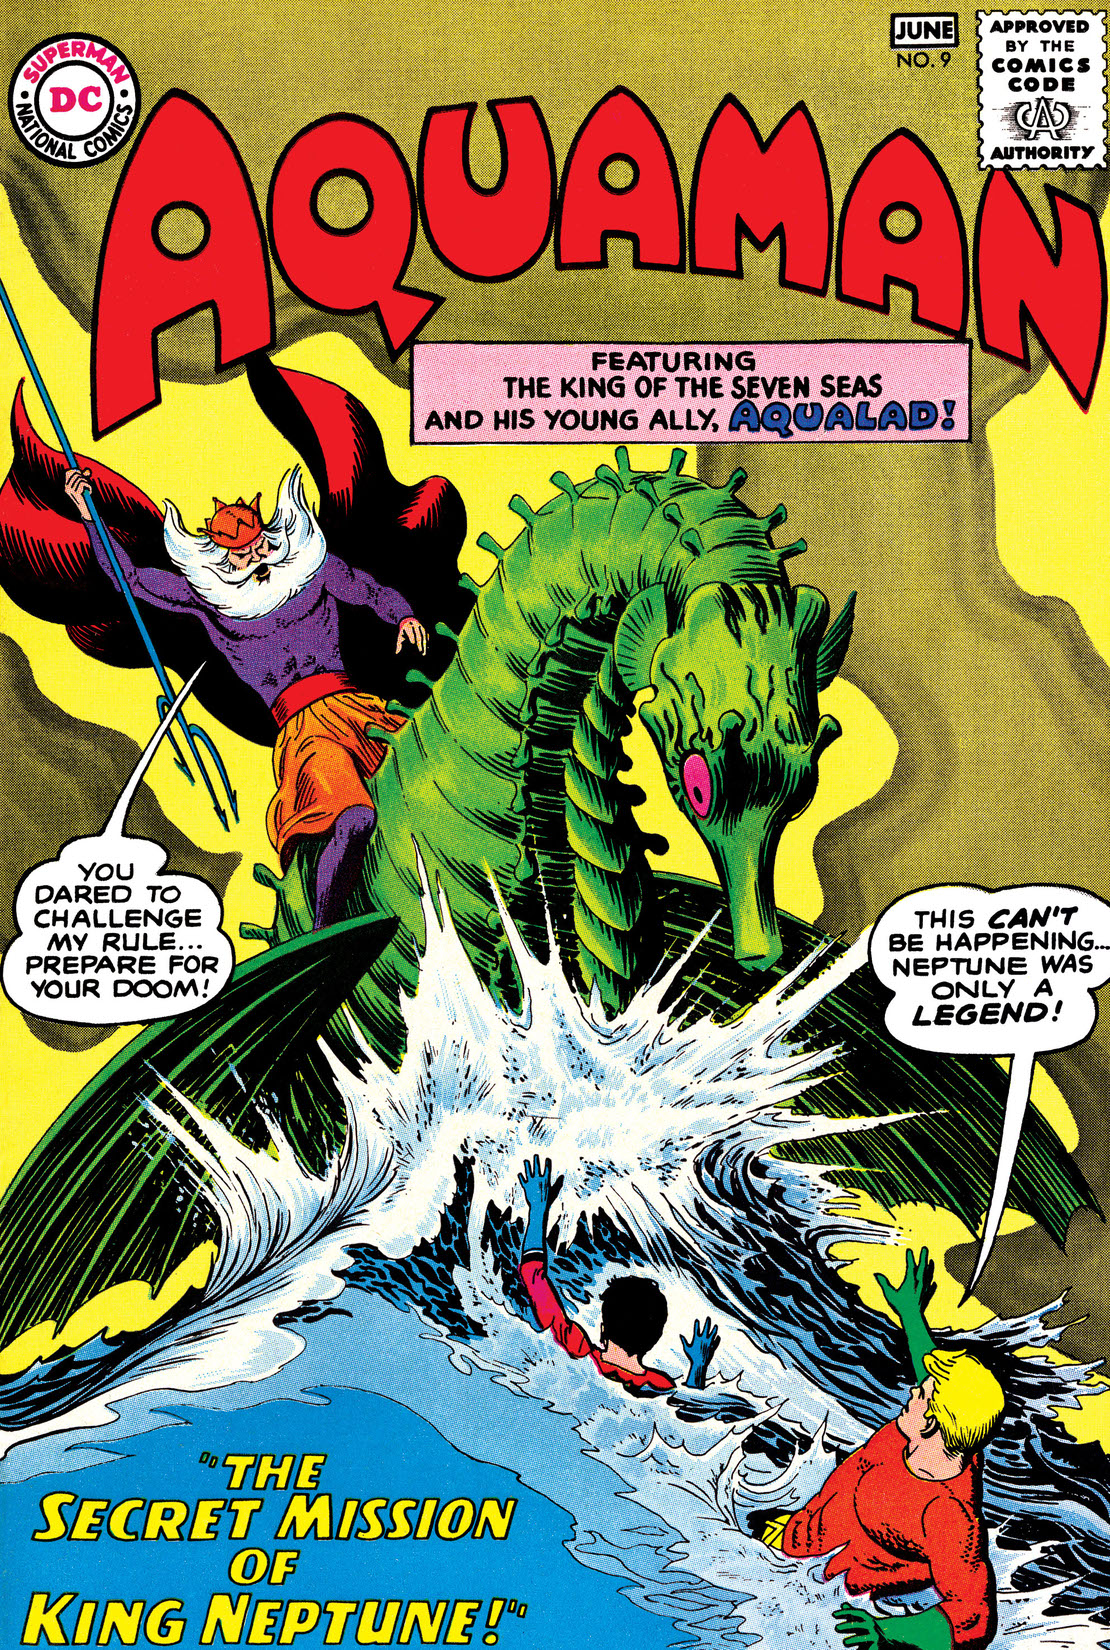 Aquaman (1962-) #9 preview images